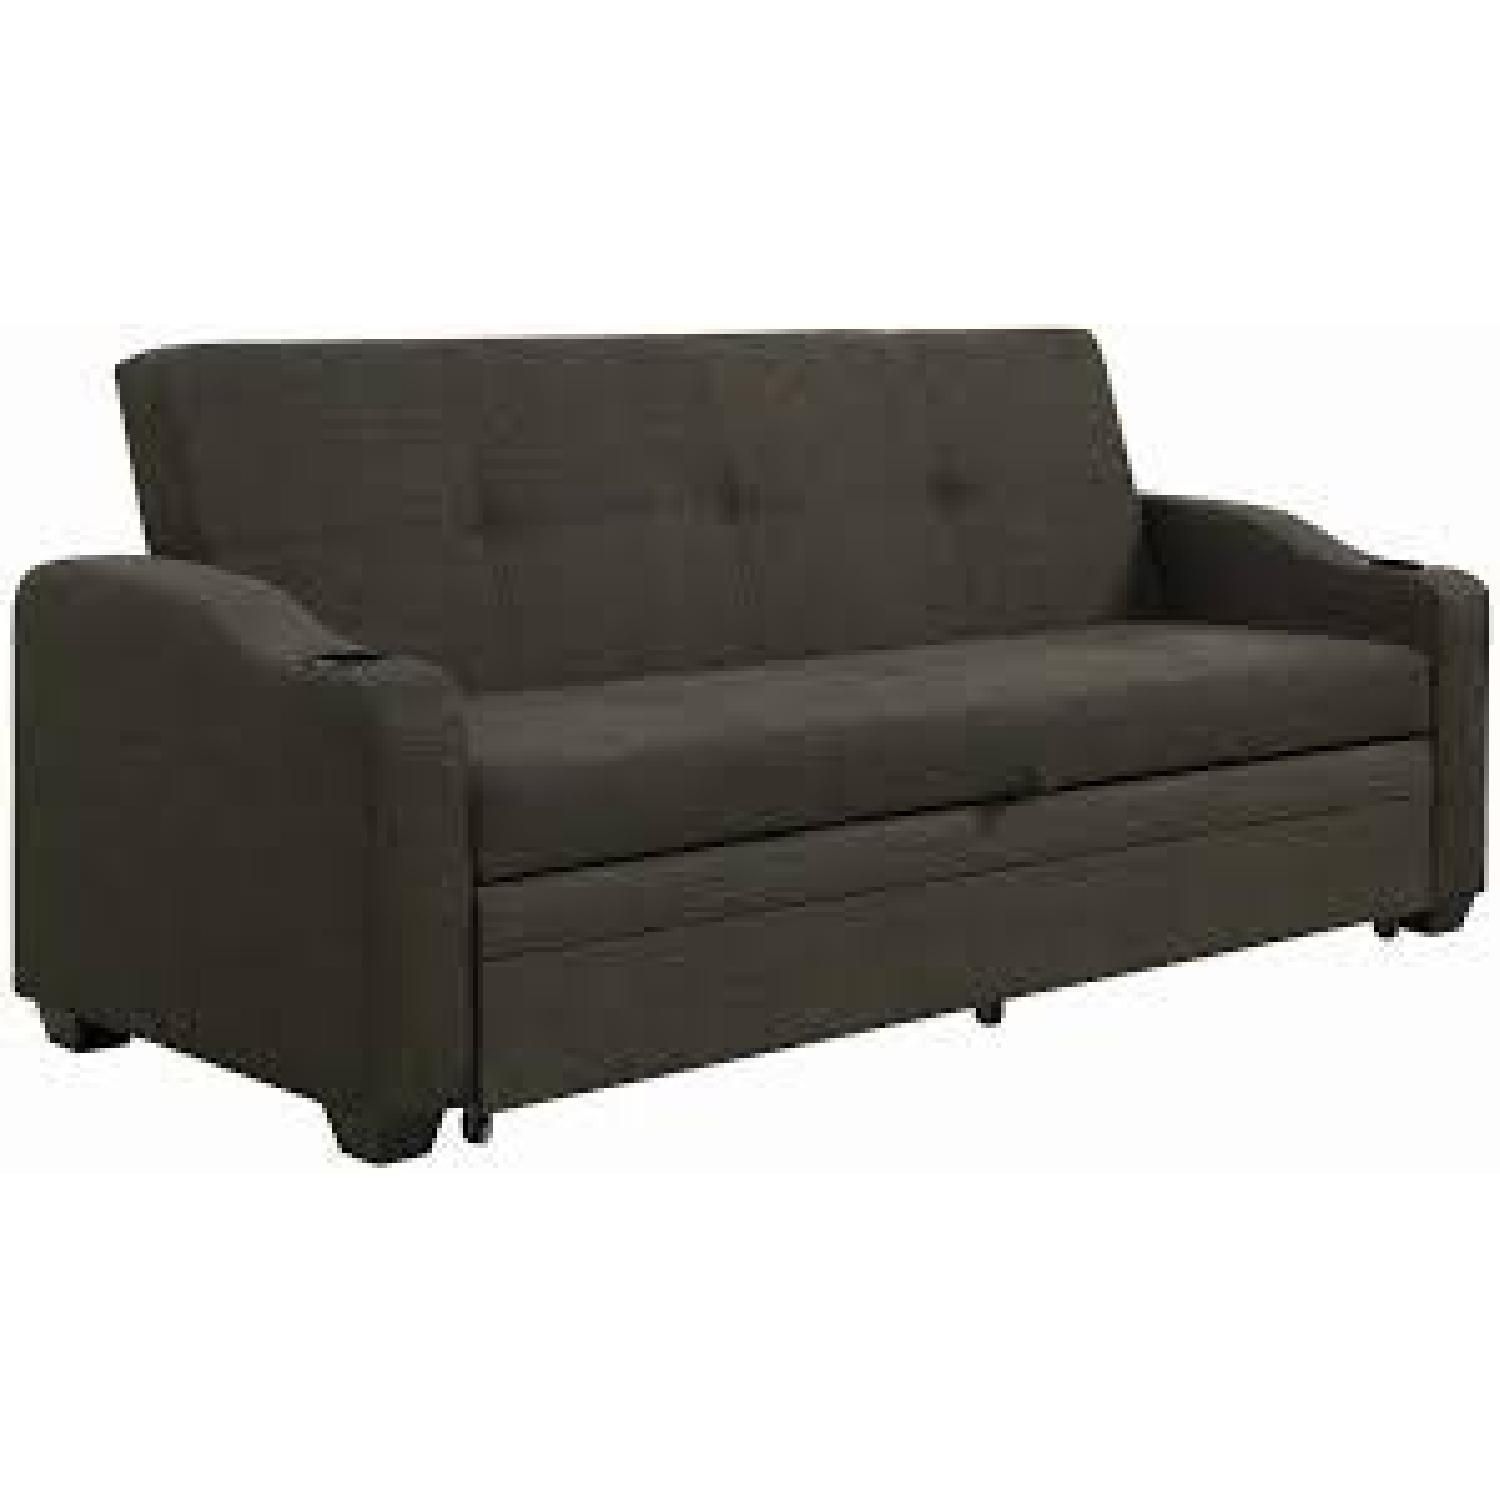 Charcoal Grey Pull Out Sleeper Sofa – Aptdeco Pertaining To 3 In 1 Gray Pull Out Sleeper Sofas (Gallery 15 of 20)